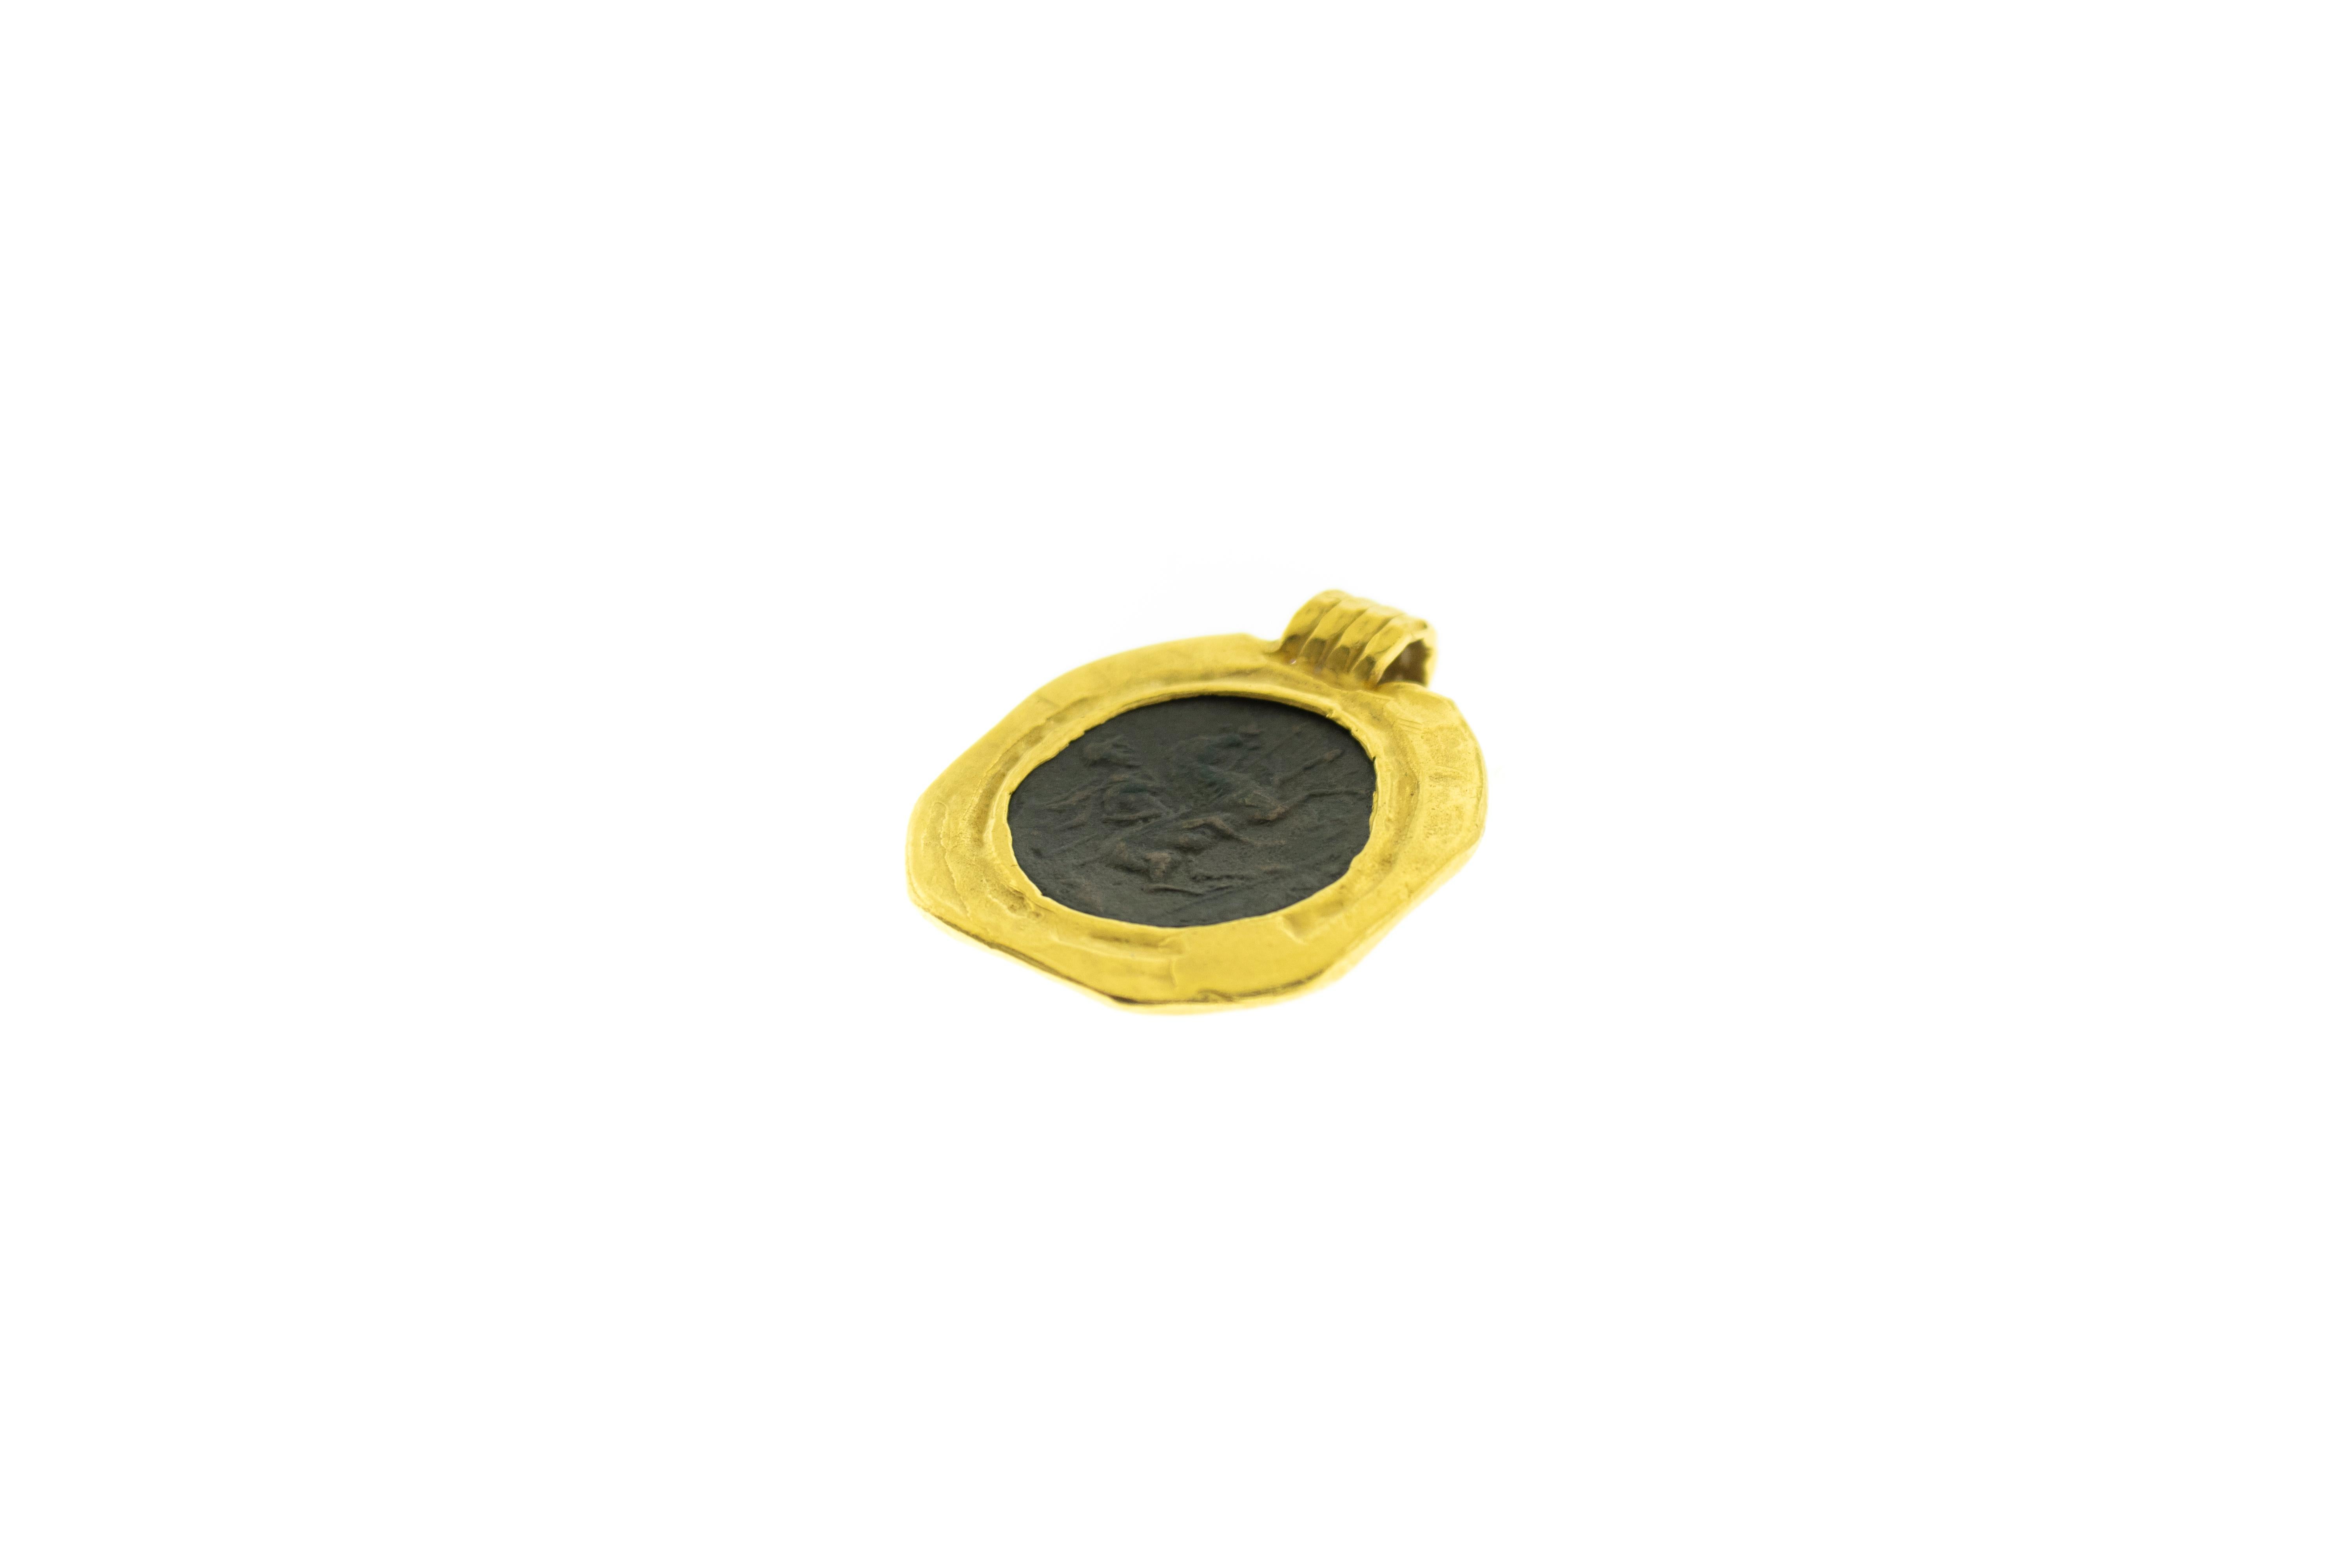 Revival Ancient Coin Artifact Mounted in 22 Karat Gold Pendant